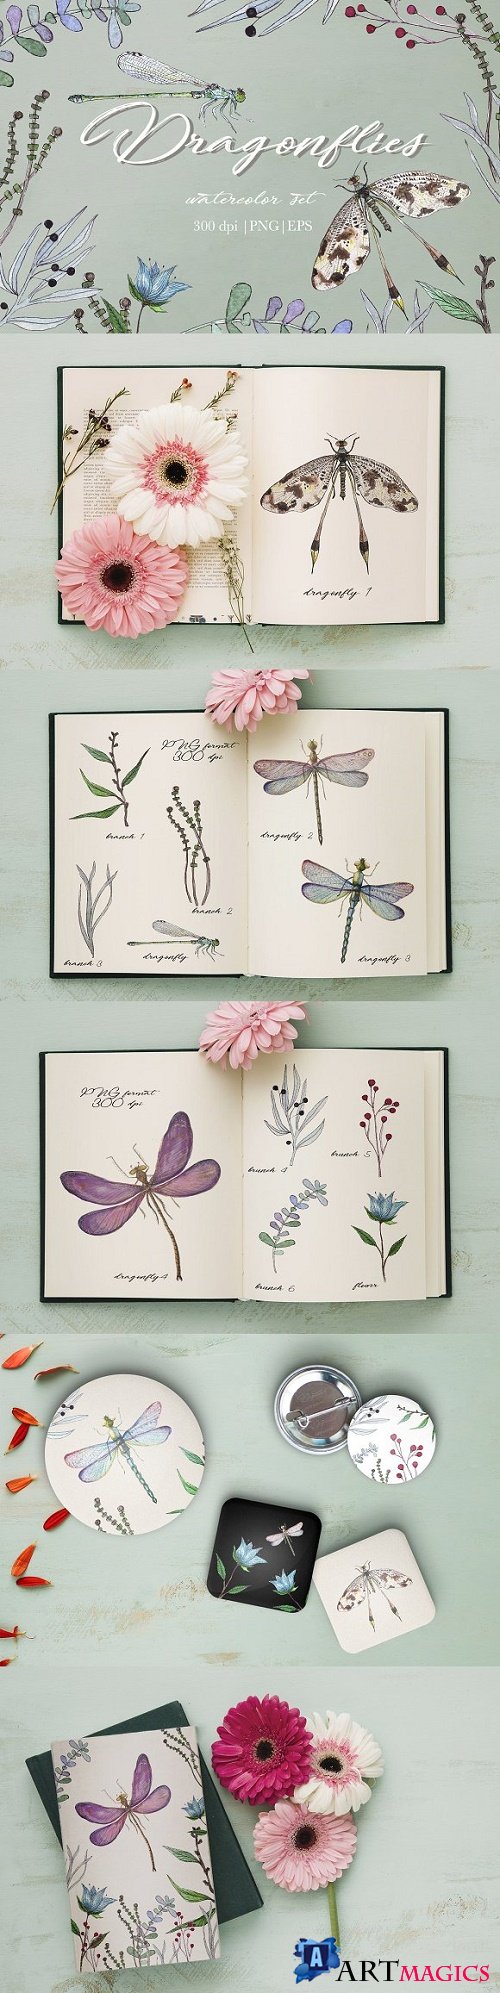 Dragonflies watercolor set - 1624787